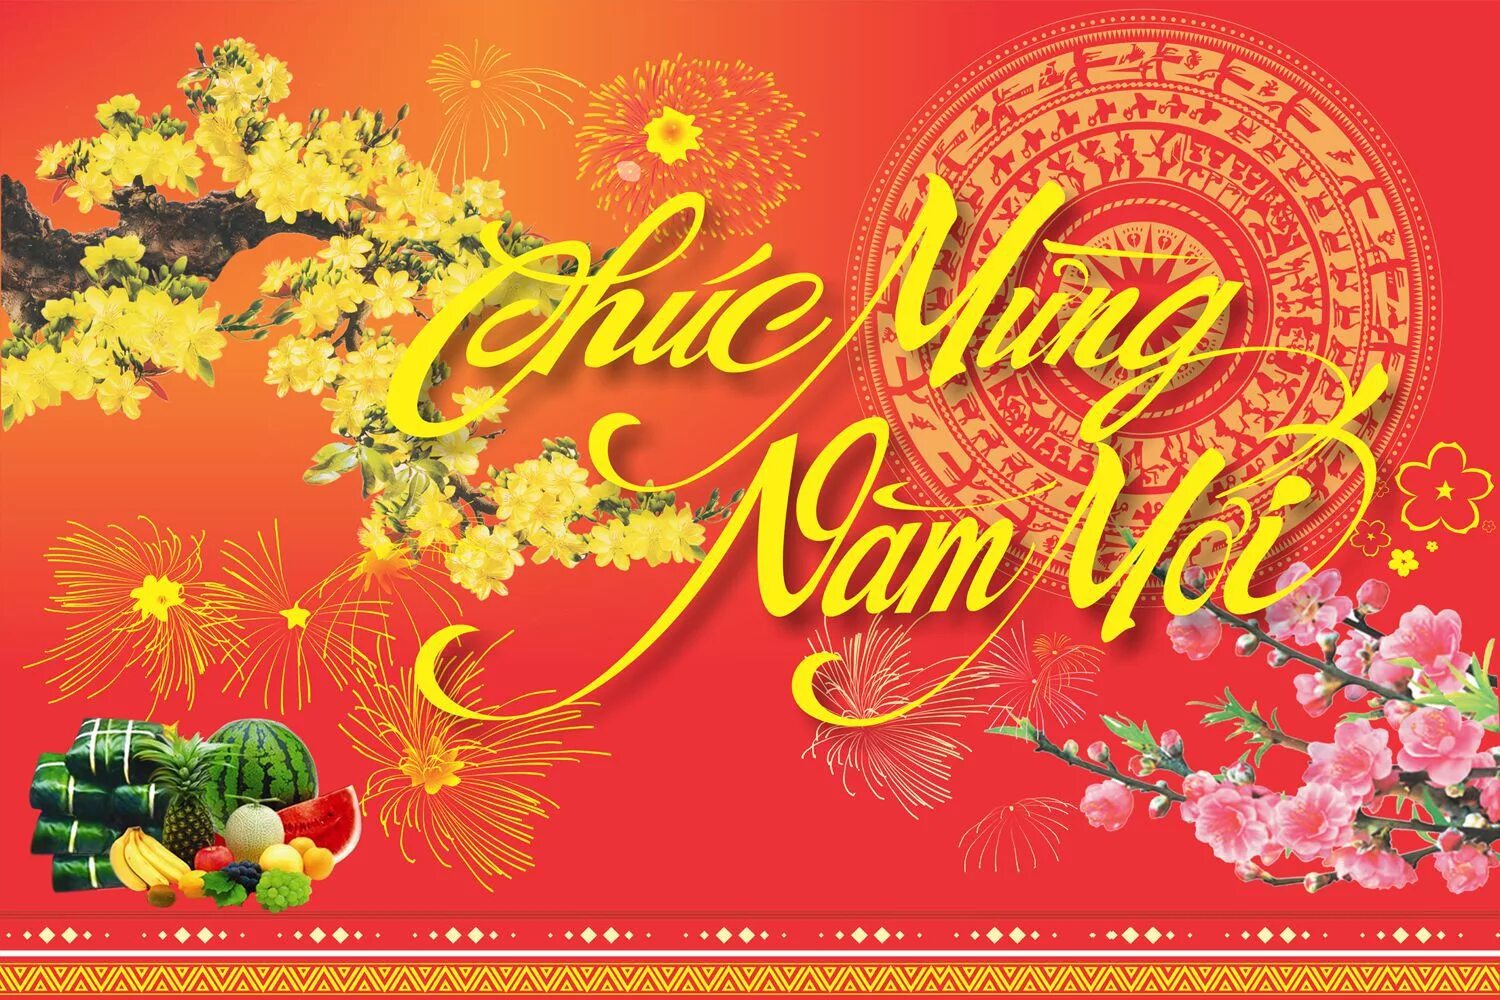 Chuc mung nam moi открытки. Chúc mung nam moi. Поздравление с вьетнамским новым годом. Chuc mung nam moi 2022.